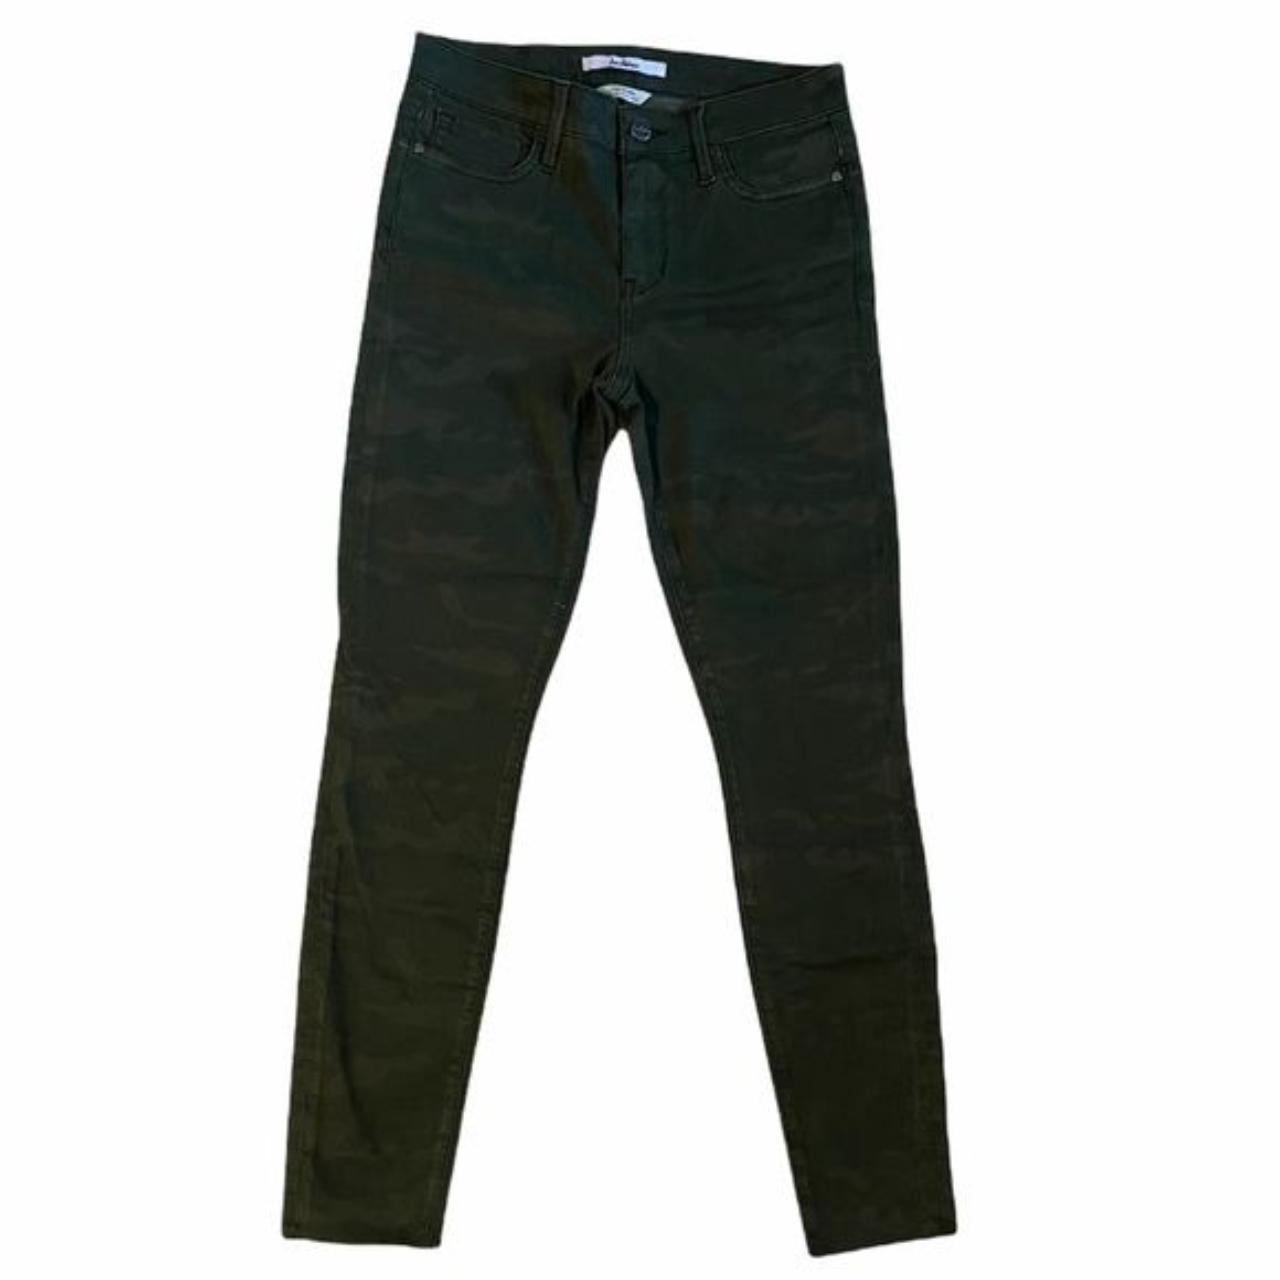 Sam Edelman Women's Green Jeans